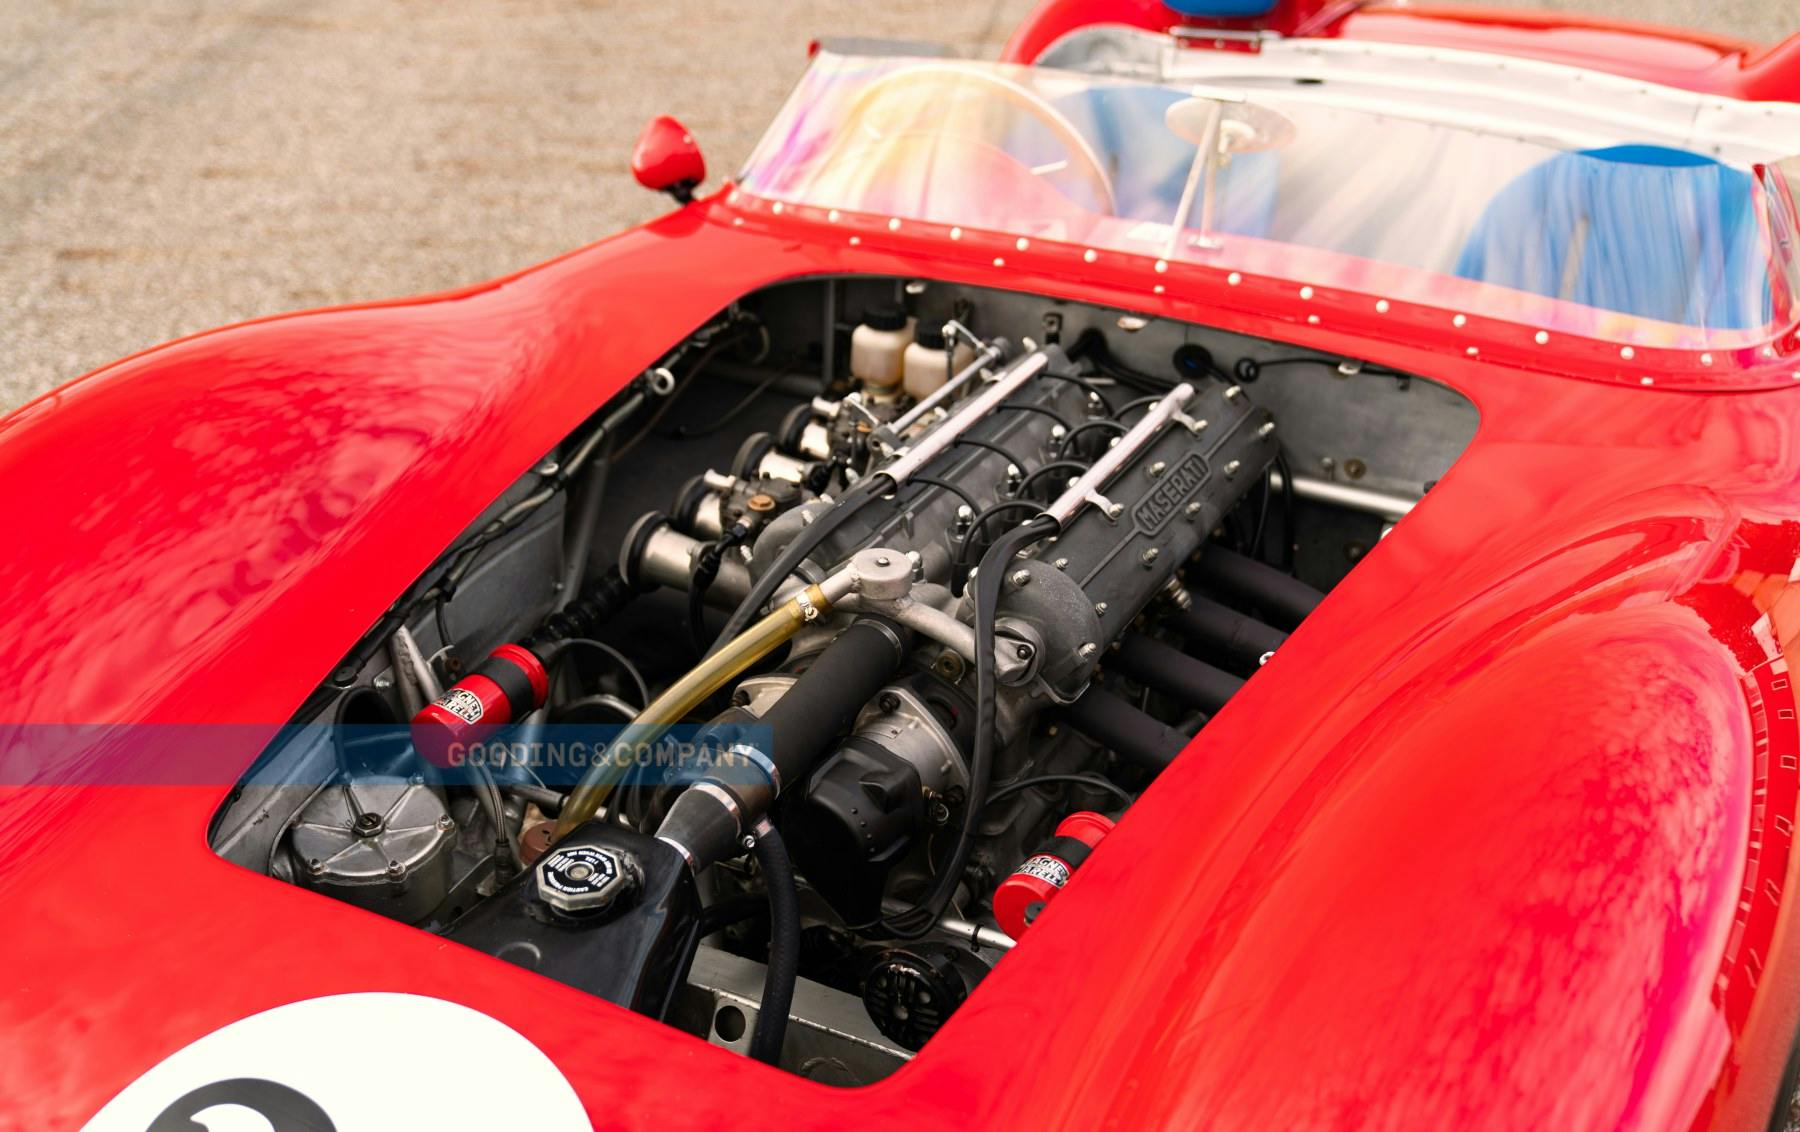 1957 Maserati 200Si engine